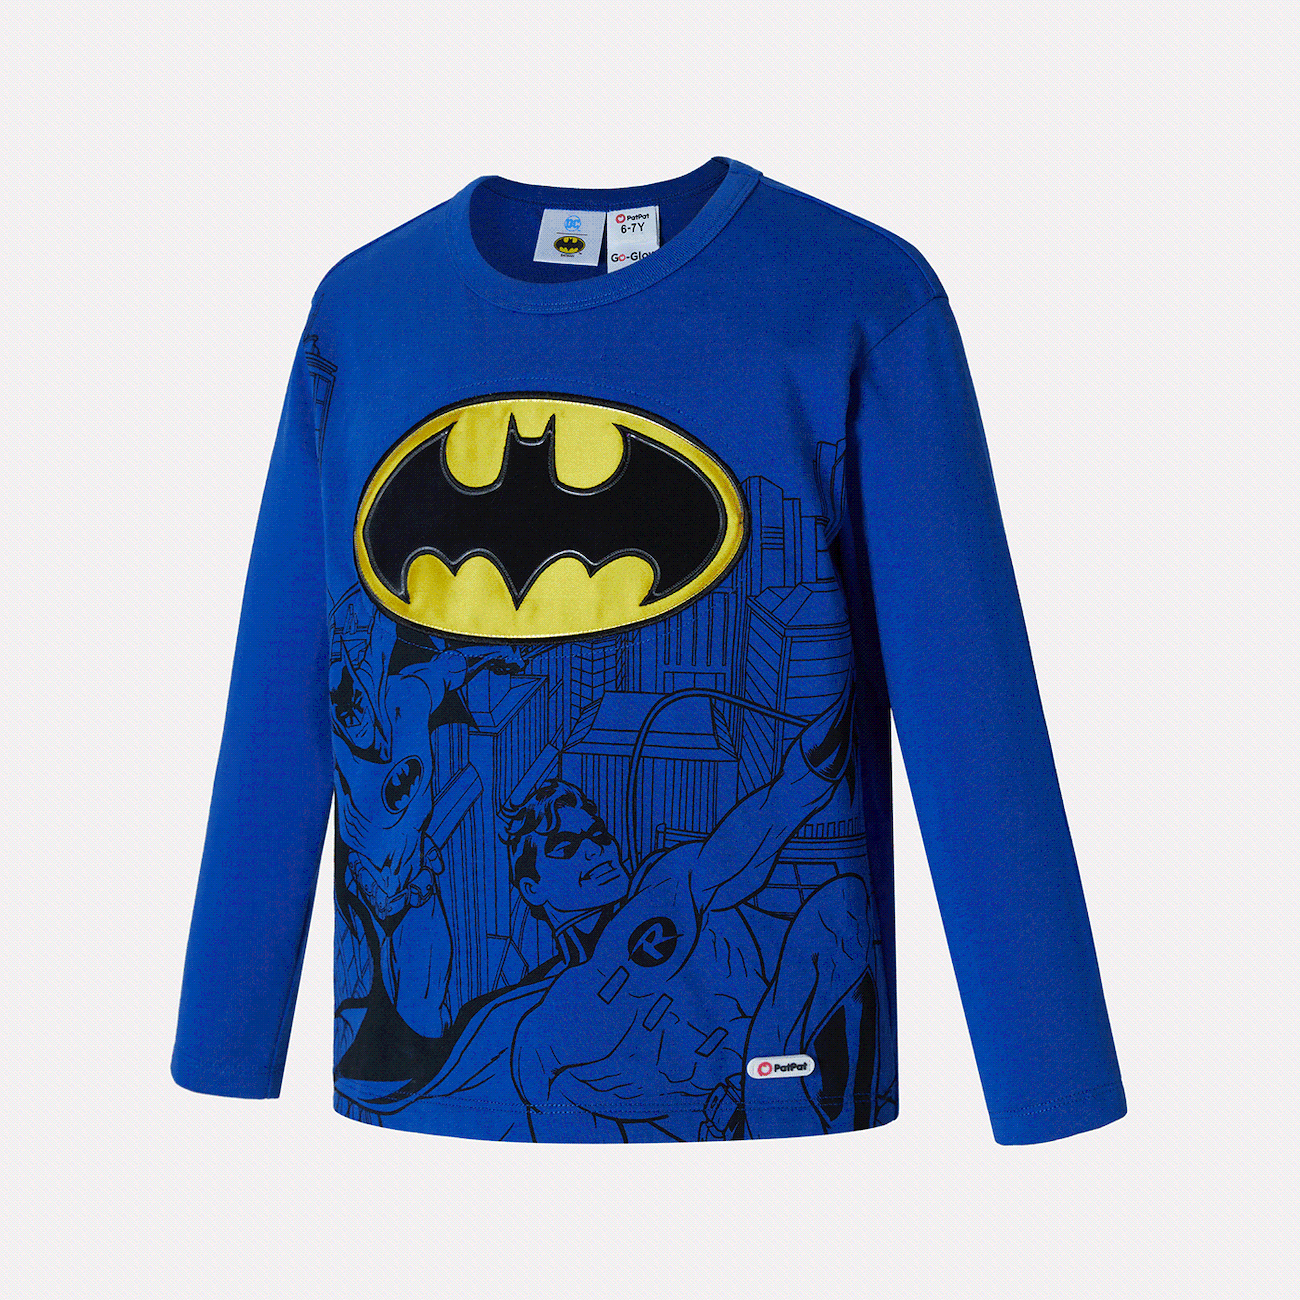 Go-Glow BATMAN Illuminating Blue Sweatshirt with Light Up Batman Pattern Including Controller (Battery Inside) Blue big image 1